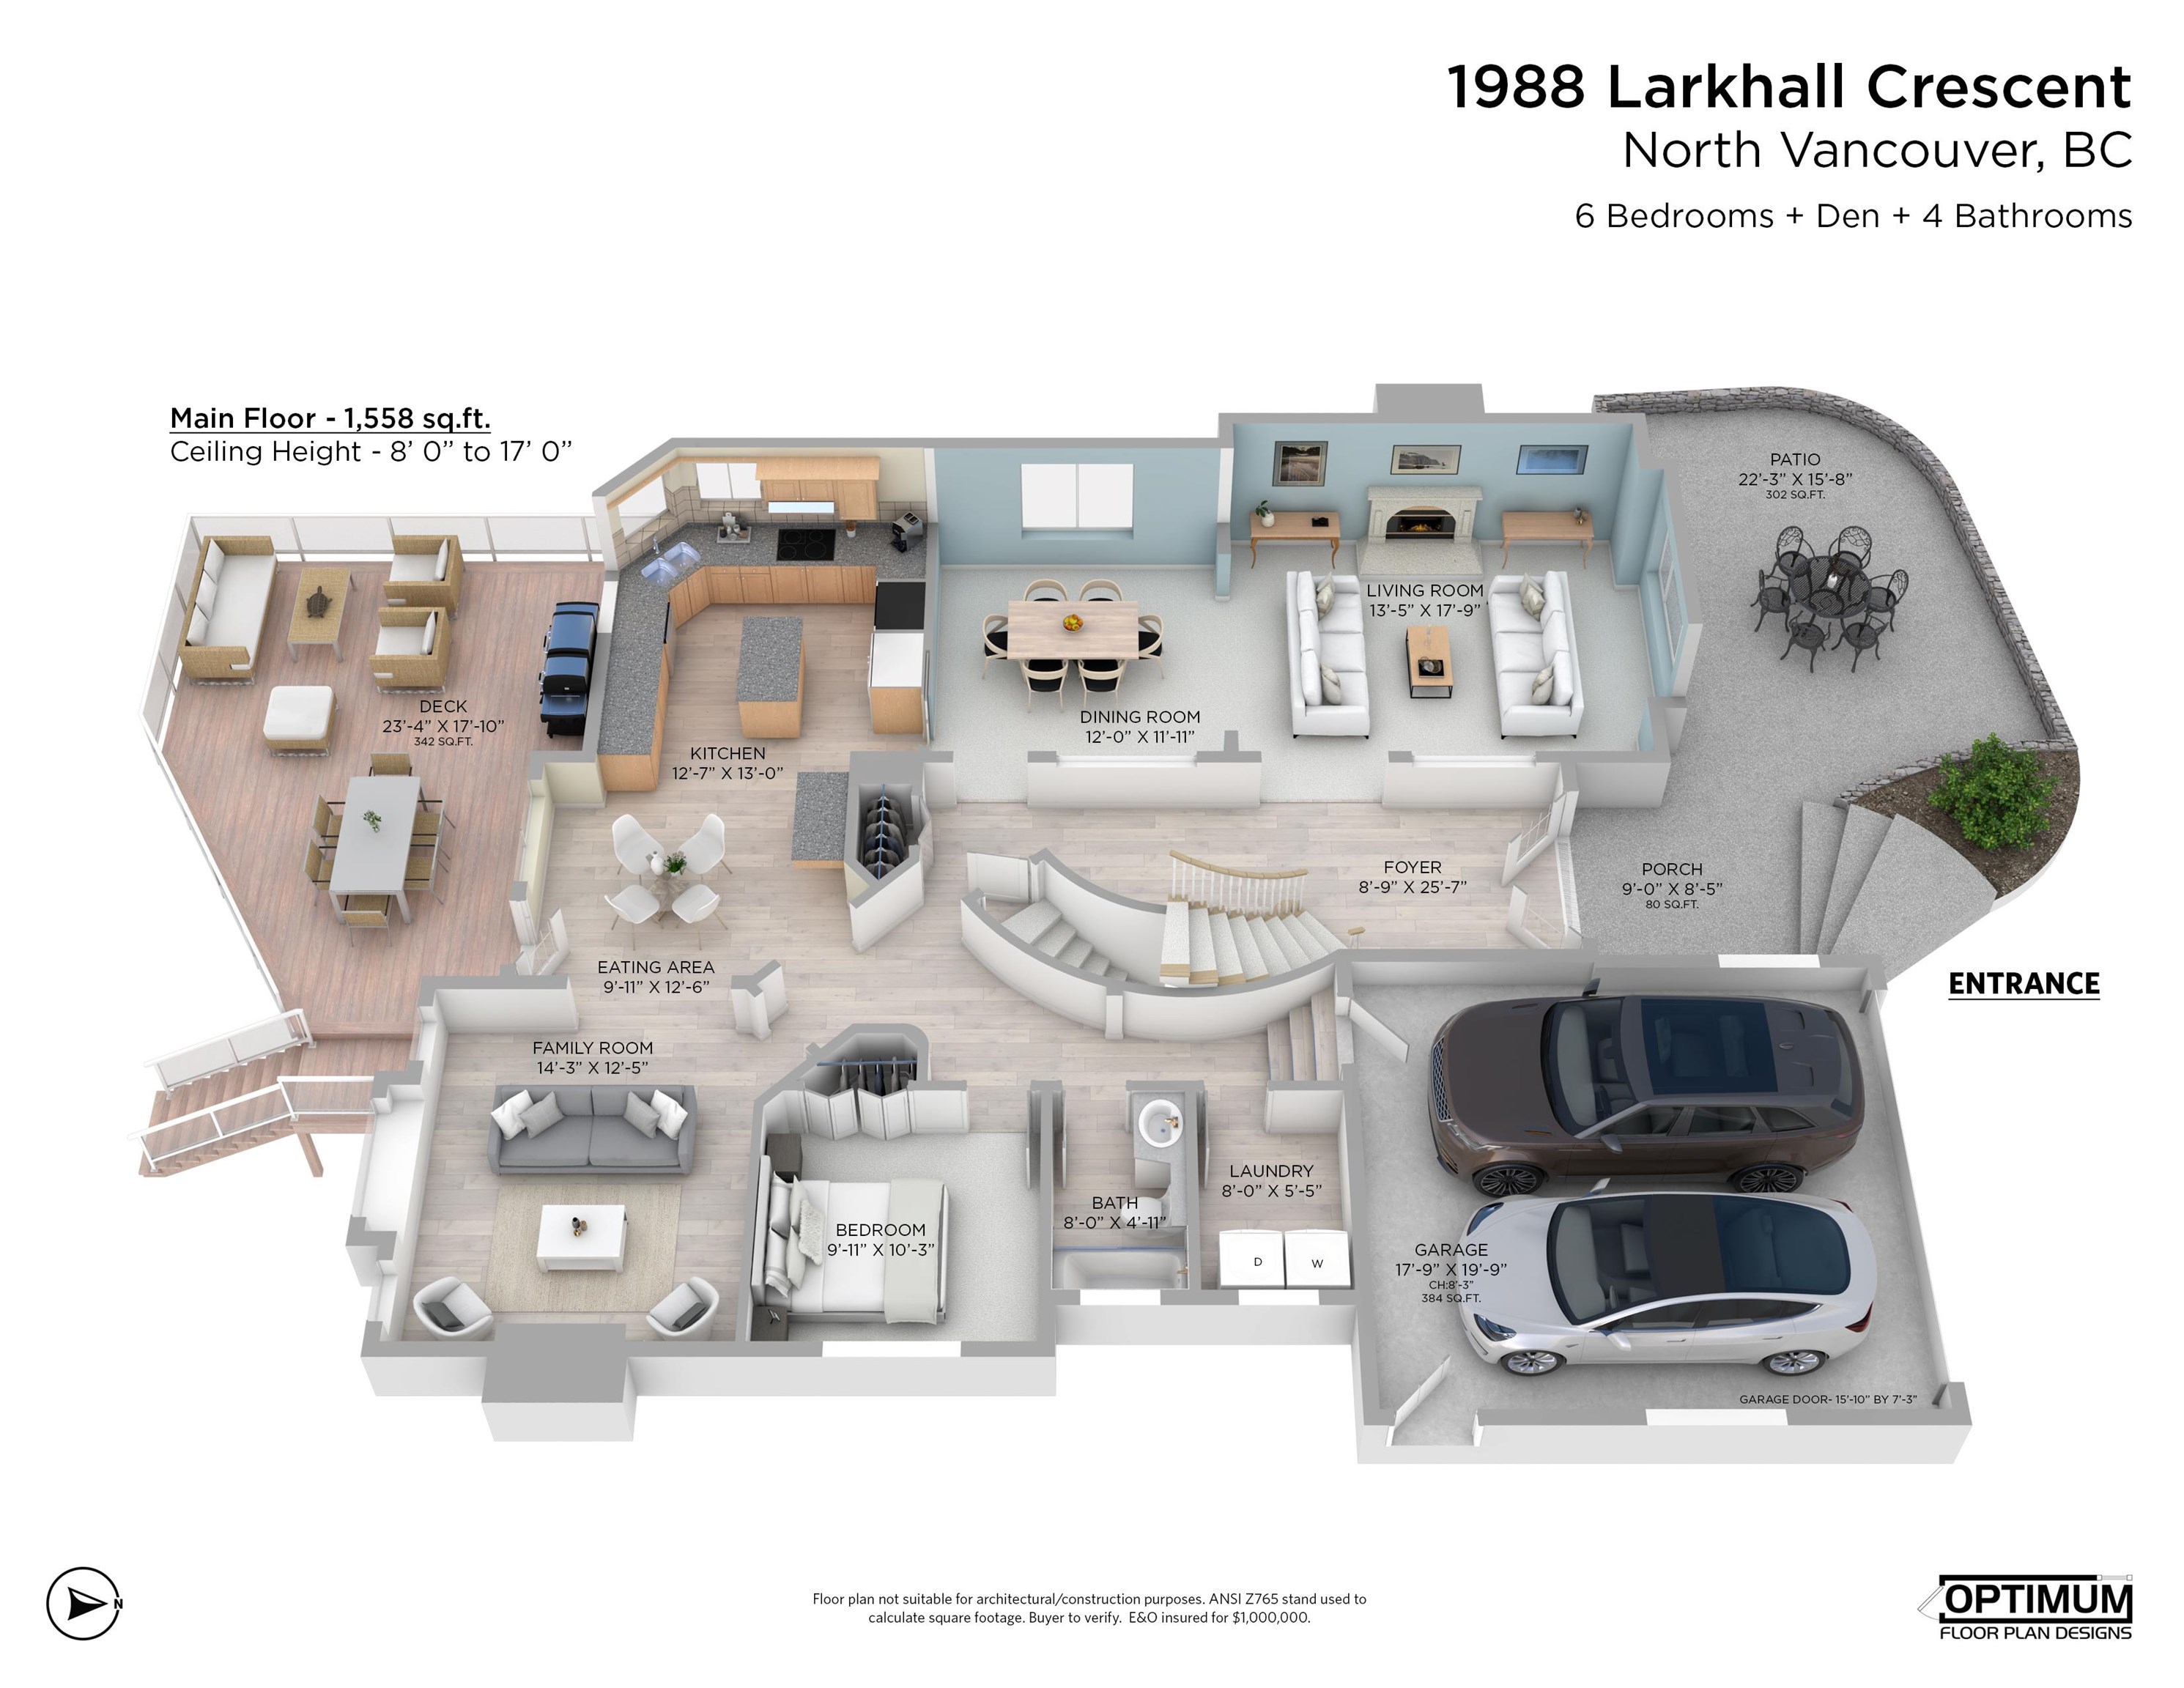 Listing image of 1988 LARKHALL CRESCENT